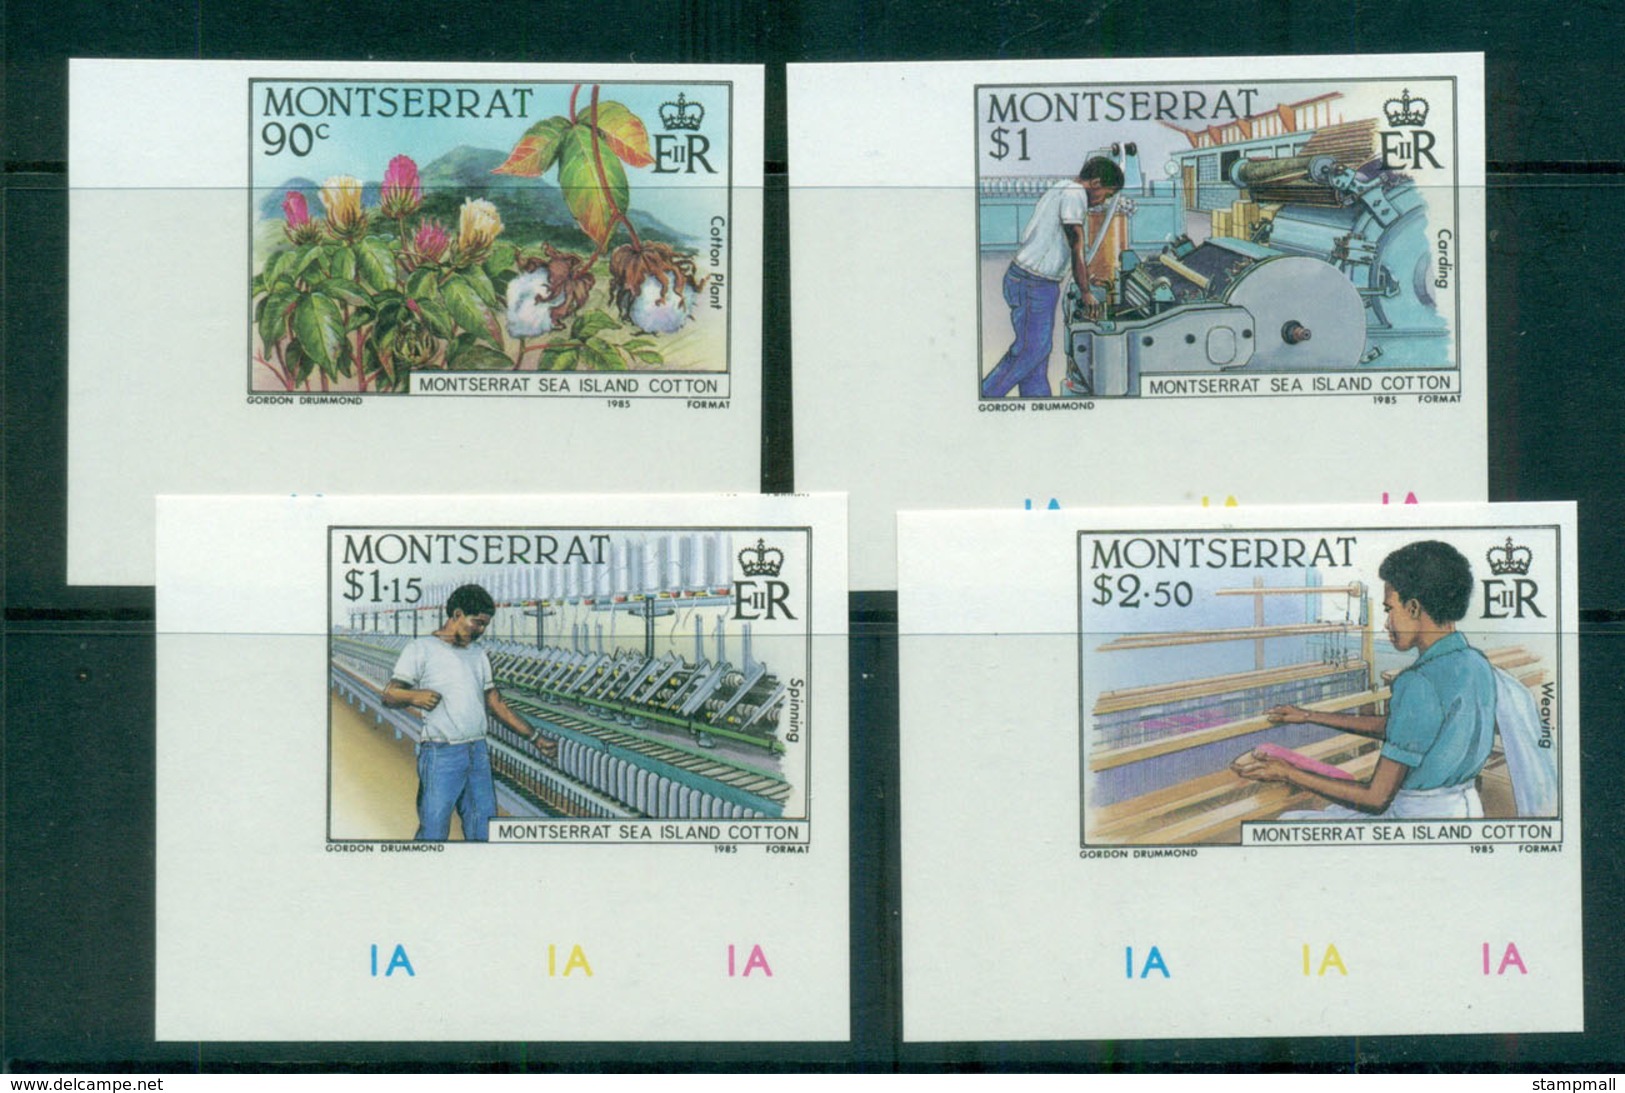 Montserrat 1985 Cotton Industry IMPERF MUH Lot68666 - Montserrat